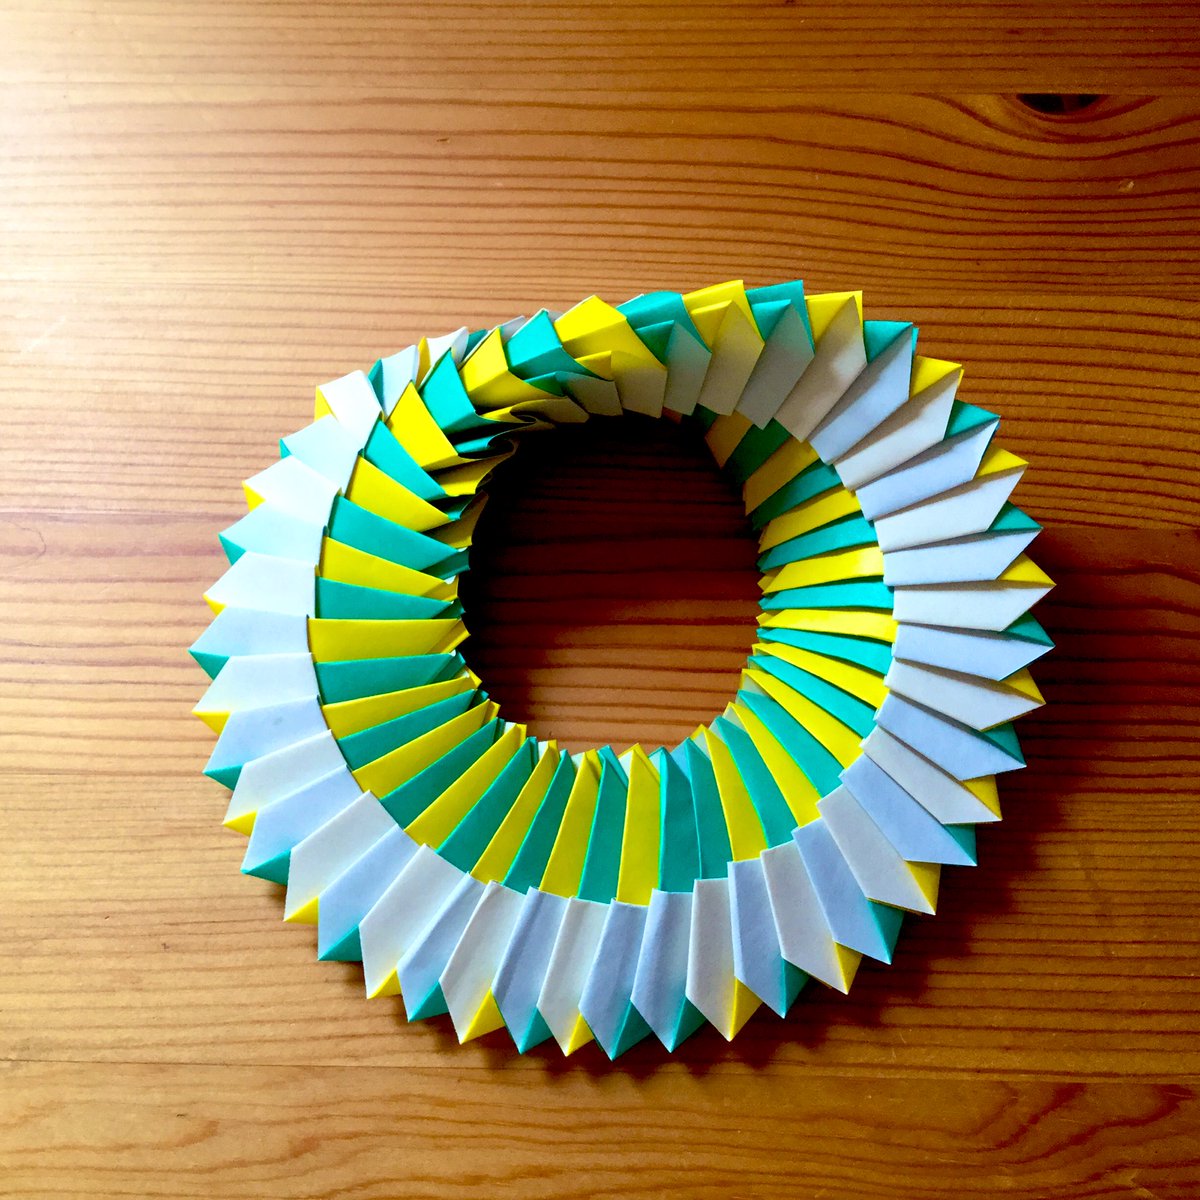 Uzivatel Origami Na Twitteru クルクル回して遊べる折り紙 インスタに載っていた折り方を参考に作成 名前は不明 Origami